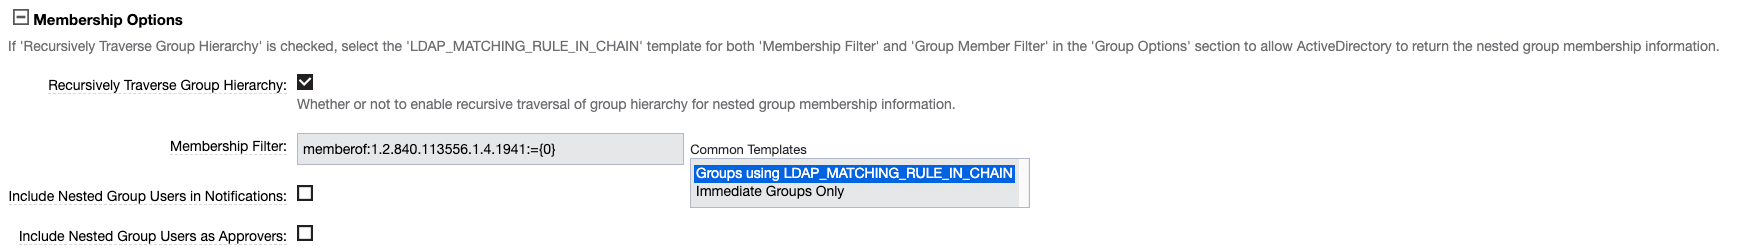 Membership Filter